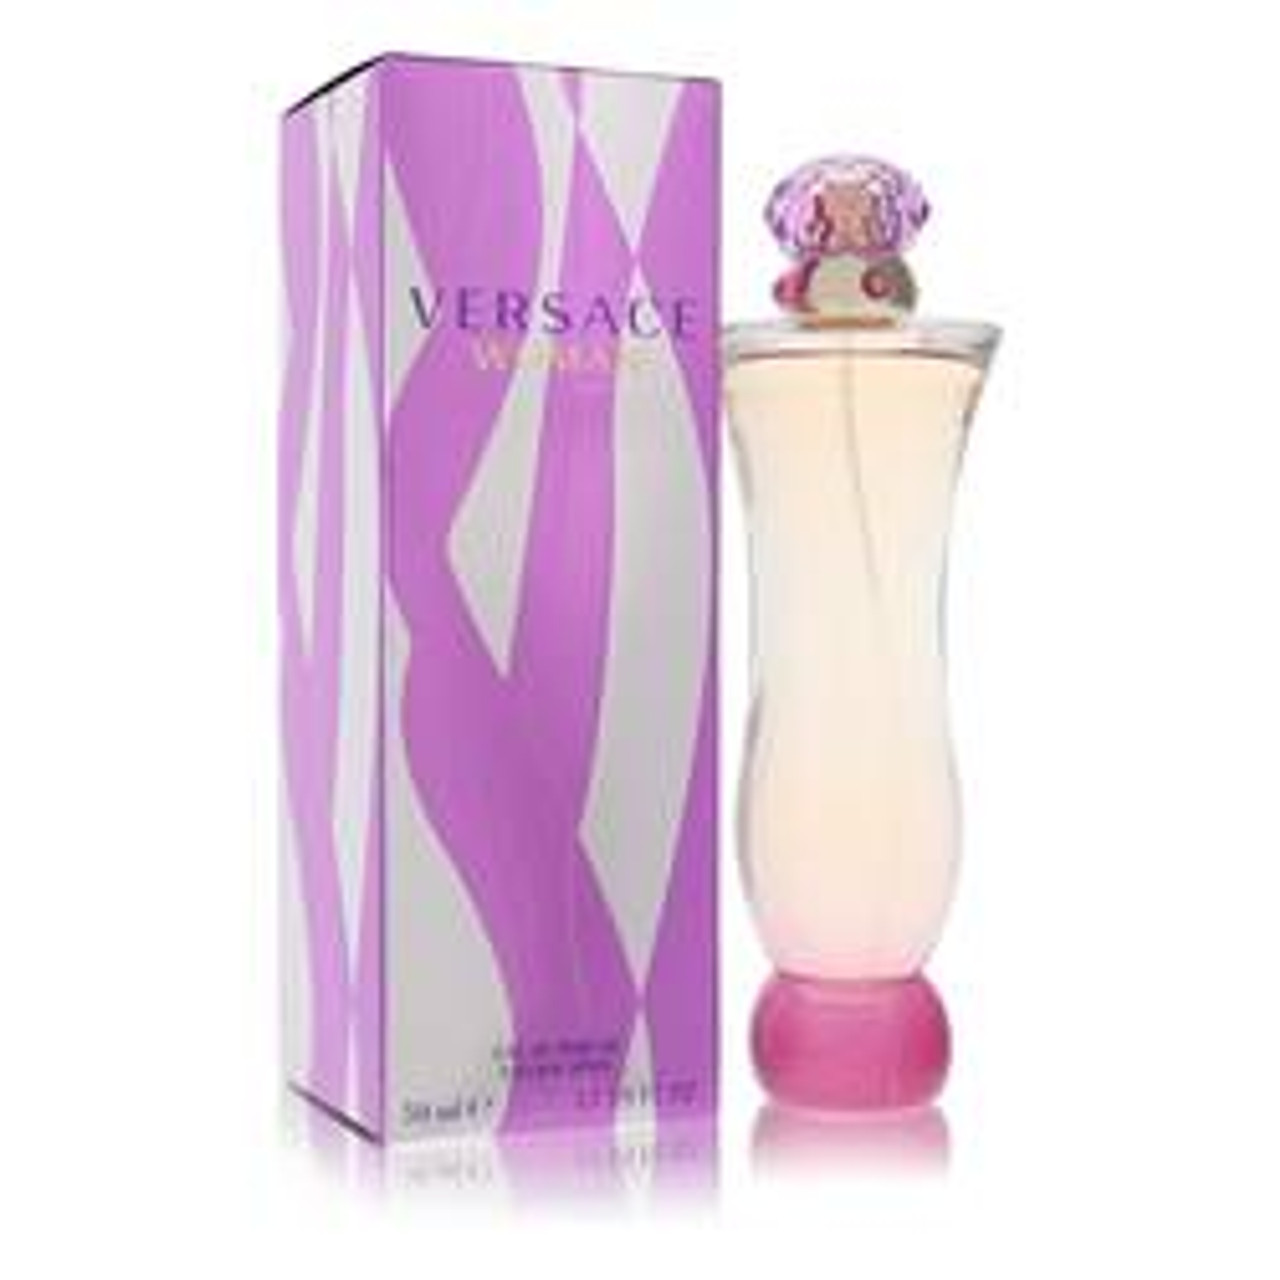 Versace Woman Perfume By Versace Eau De Parfum Spray 1.7 oz for Women - [From 83.00 - Choose pk Qty ] - *Ships from Miami